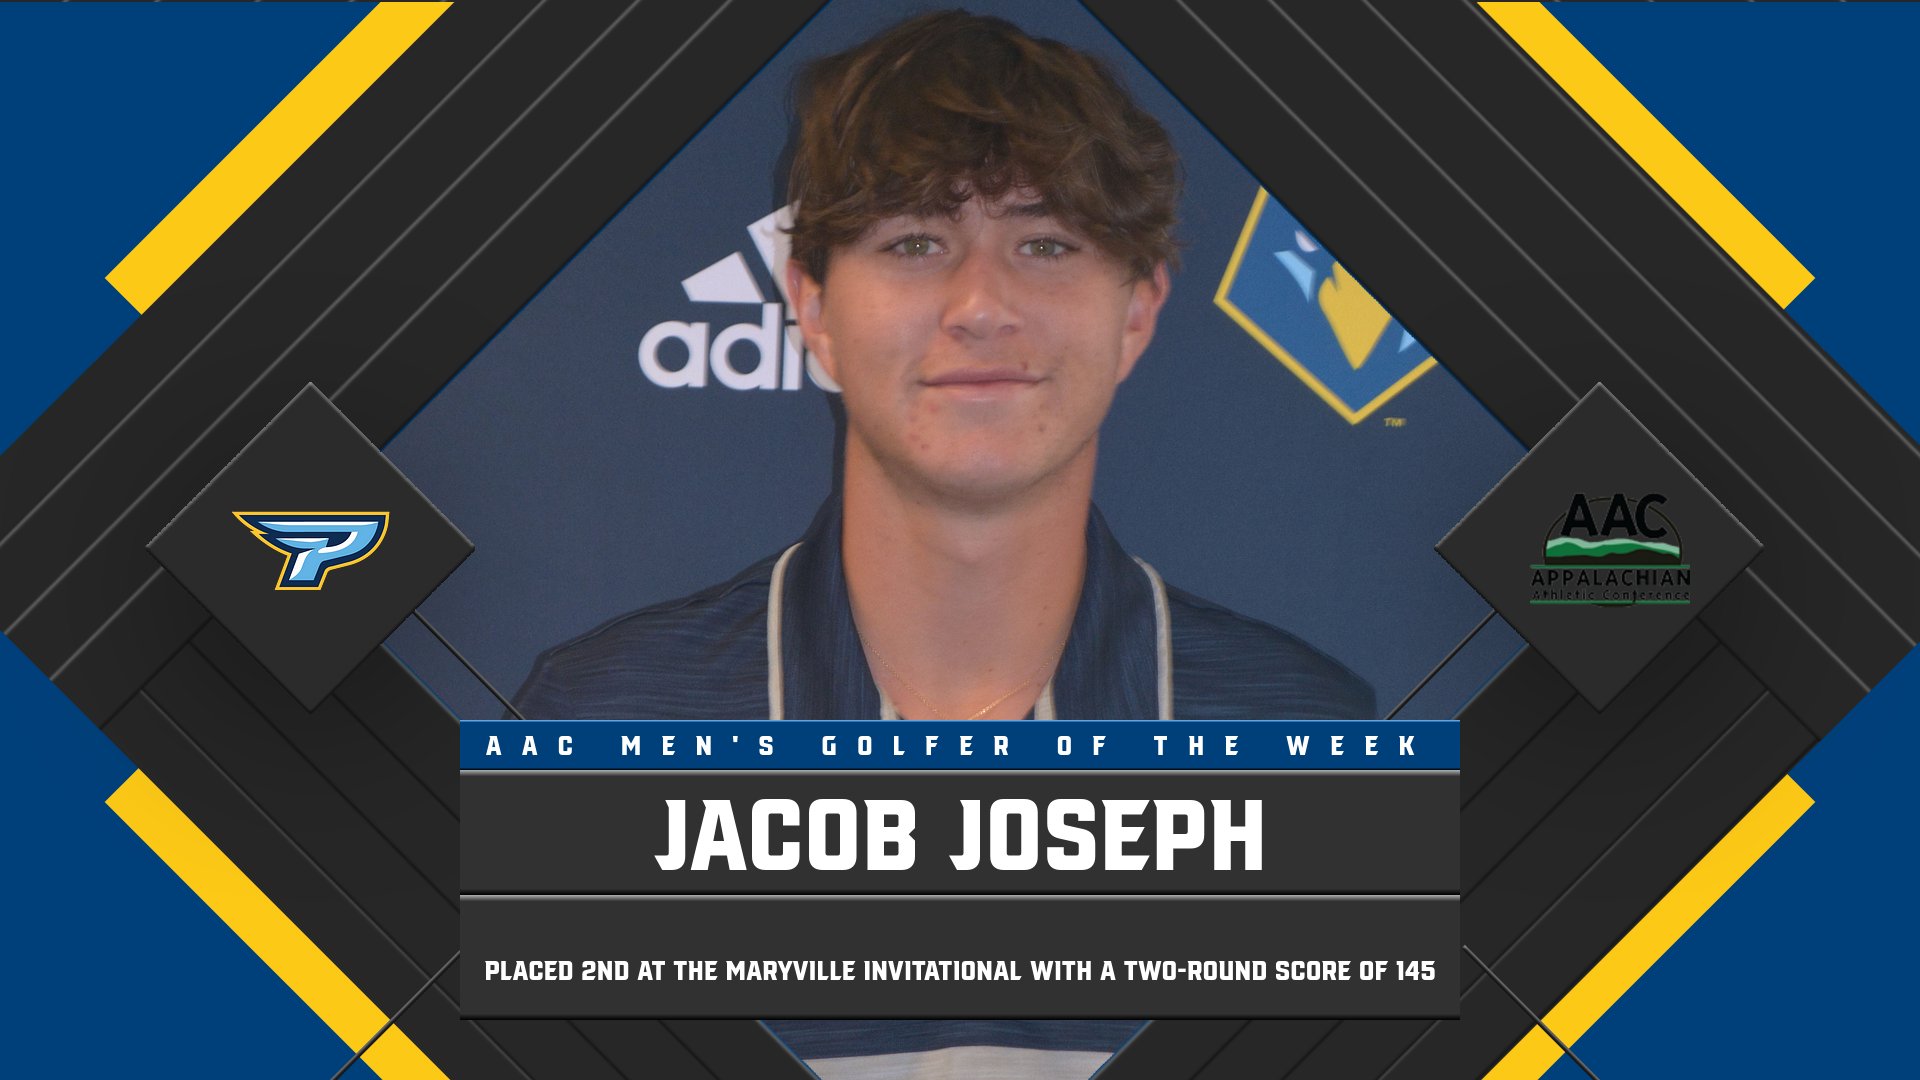 Jacob Joseph earns AAC Men’s Golfer of the Week honors